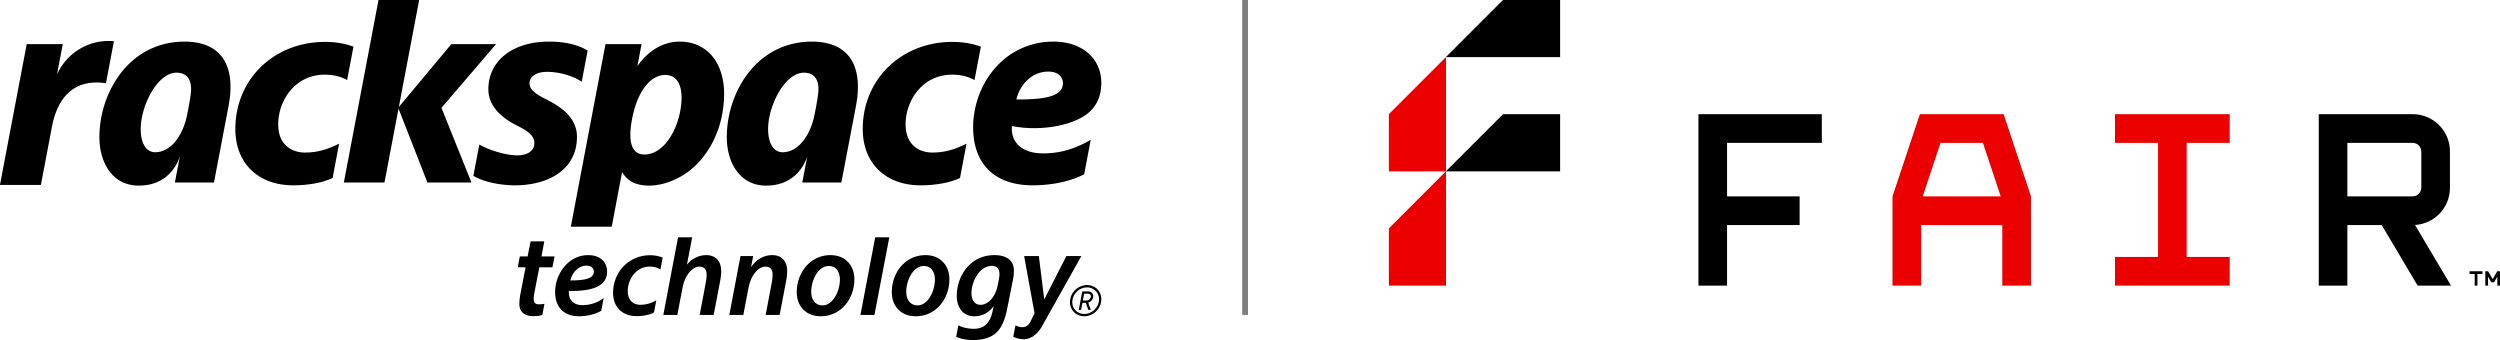 RXT-FAIR-Logo-Lockup-Color.png